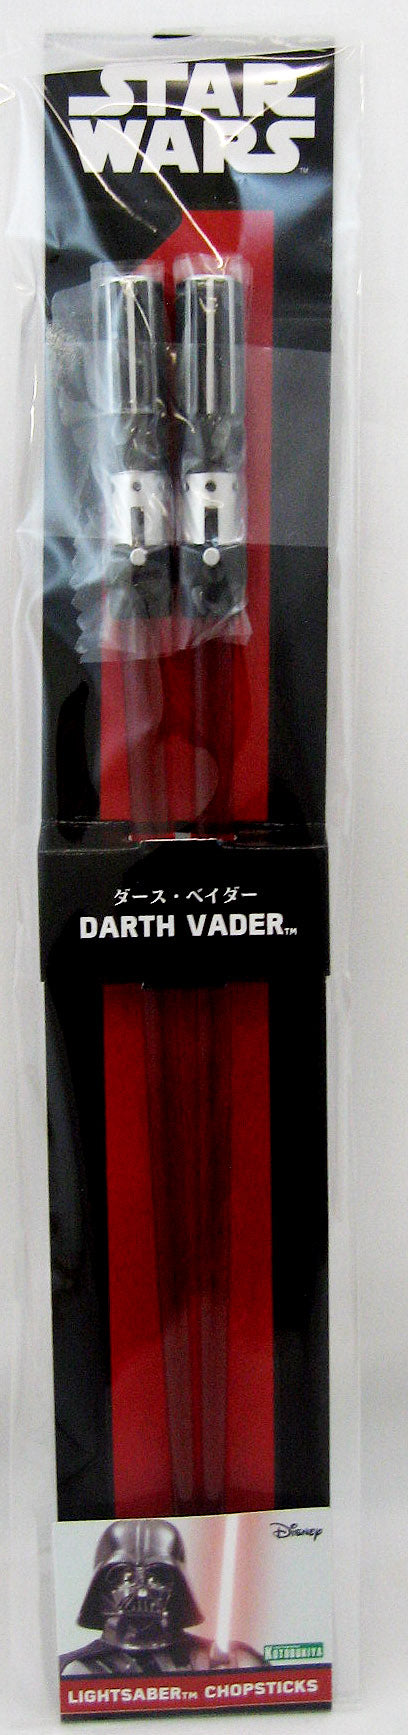 Star Wars 9 Inch Houseware Chopsticks - Darth Vader Lightsaber Chopstick